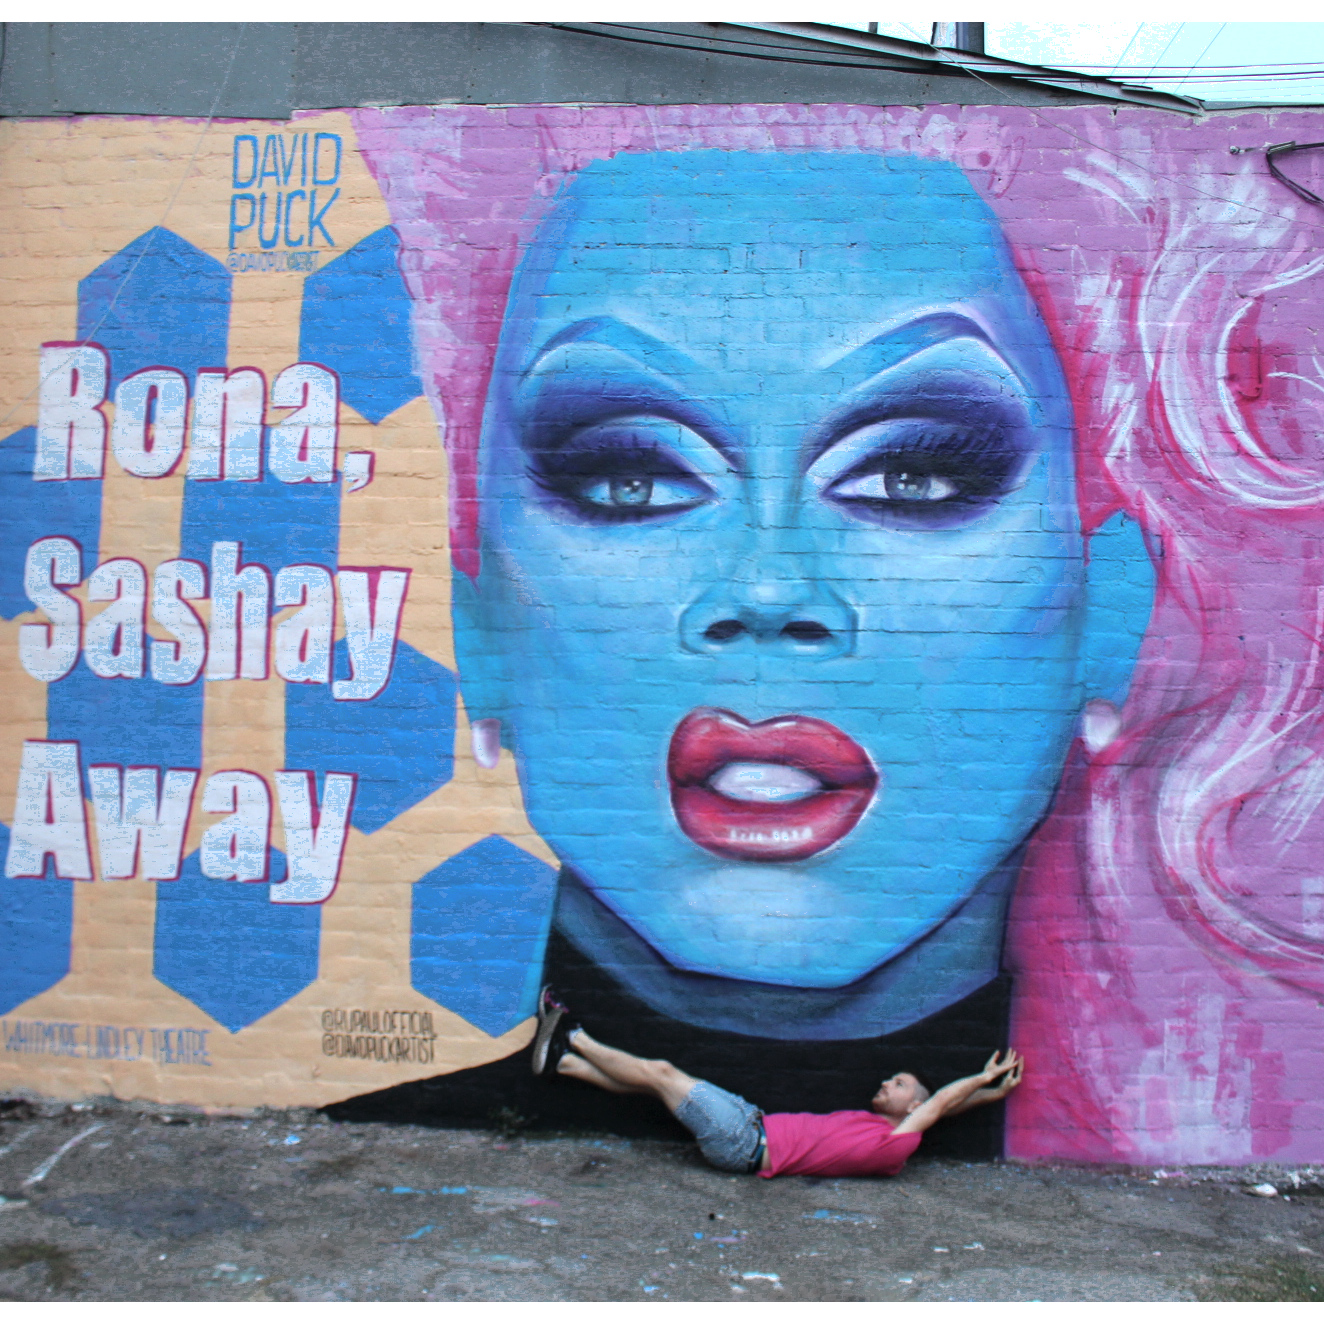 ru paul drag queen street art mural and corona sashay away